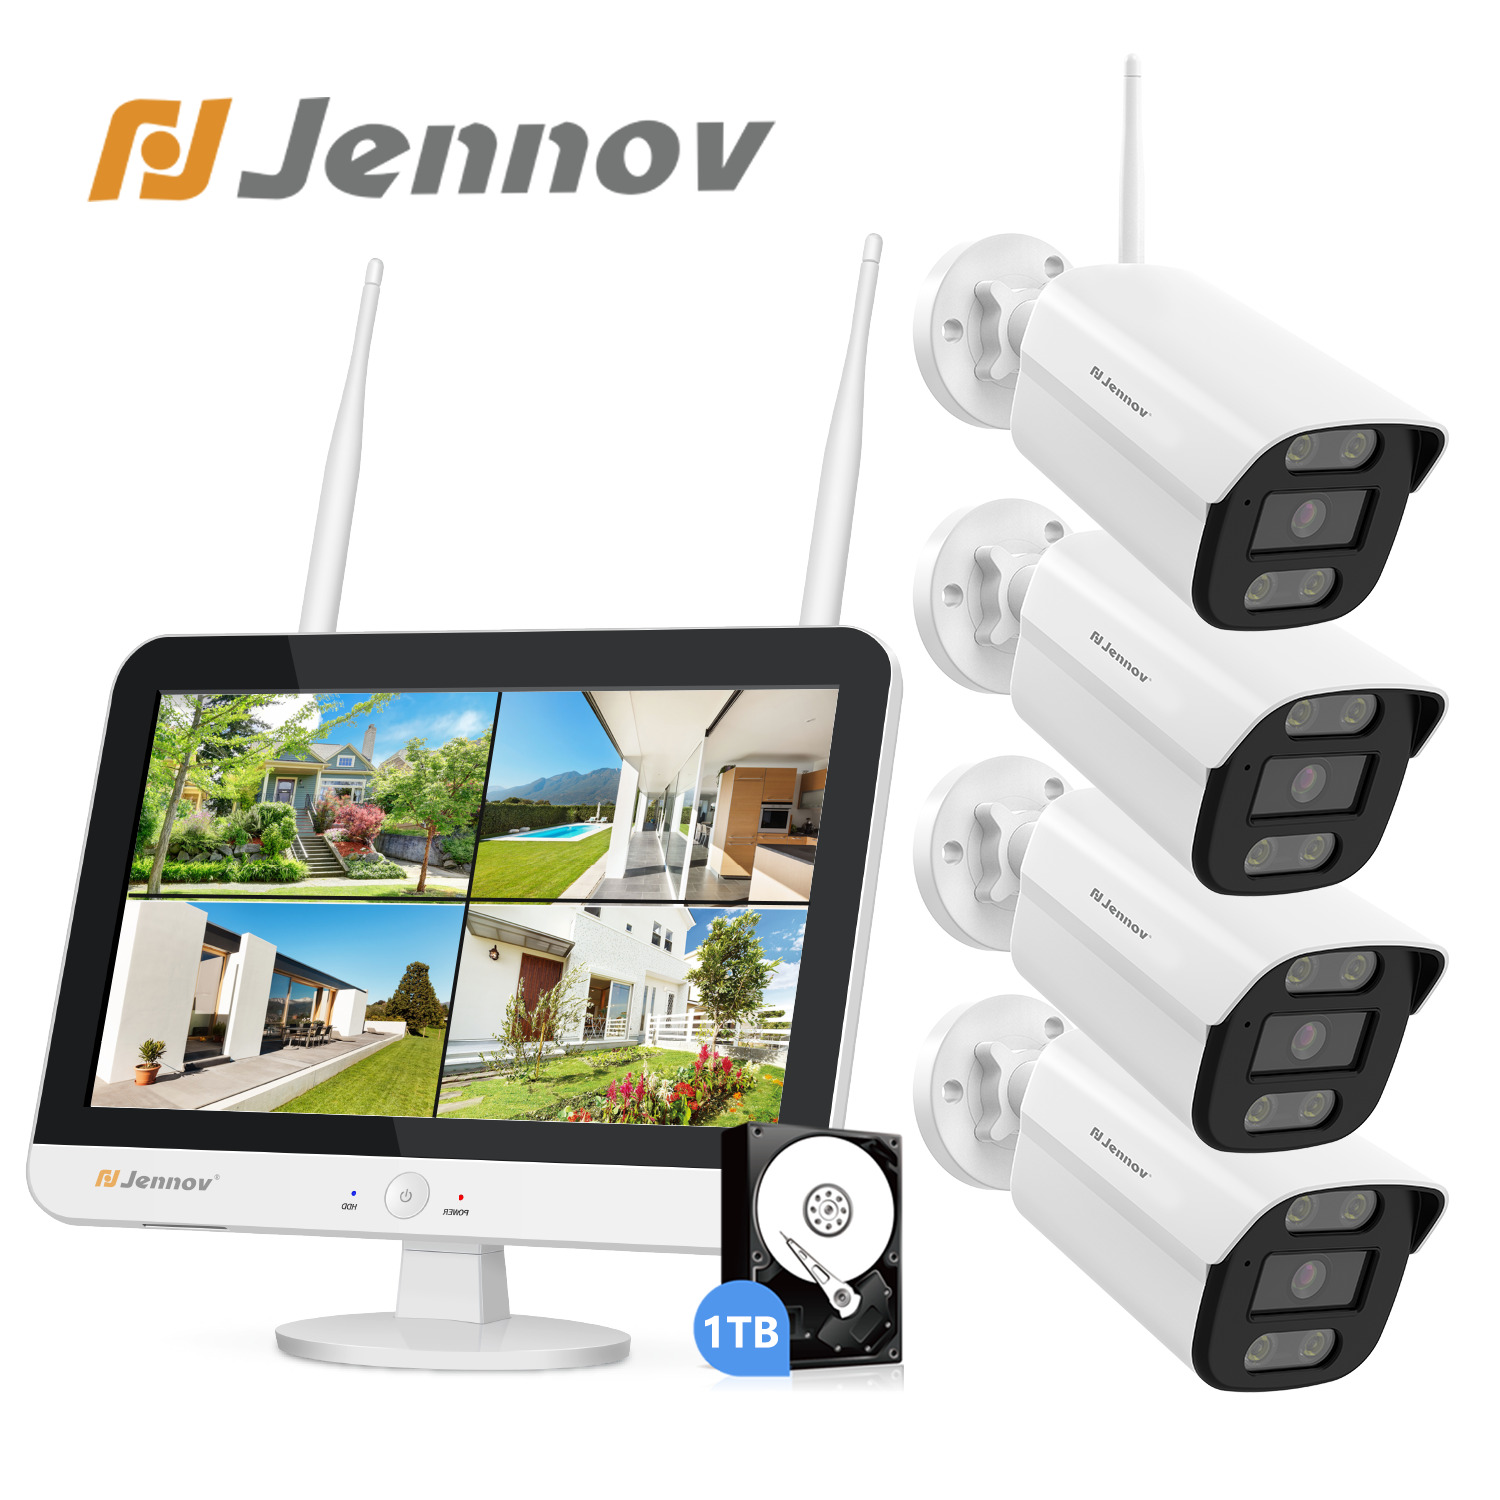 Jennov Wireless Security Camera System 5MP WiFi Color Night Vision 1TB NVR Kit